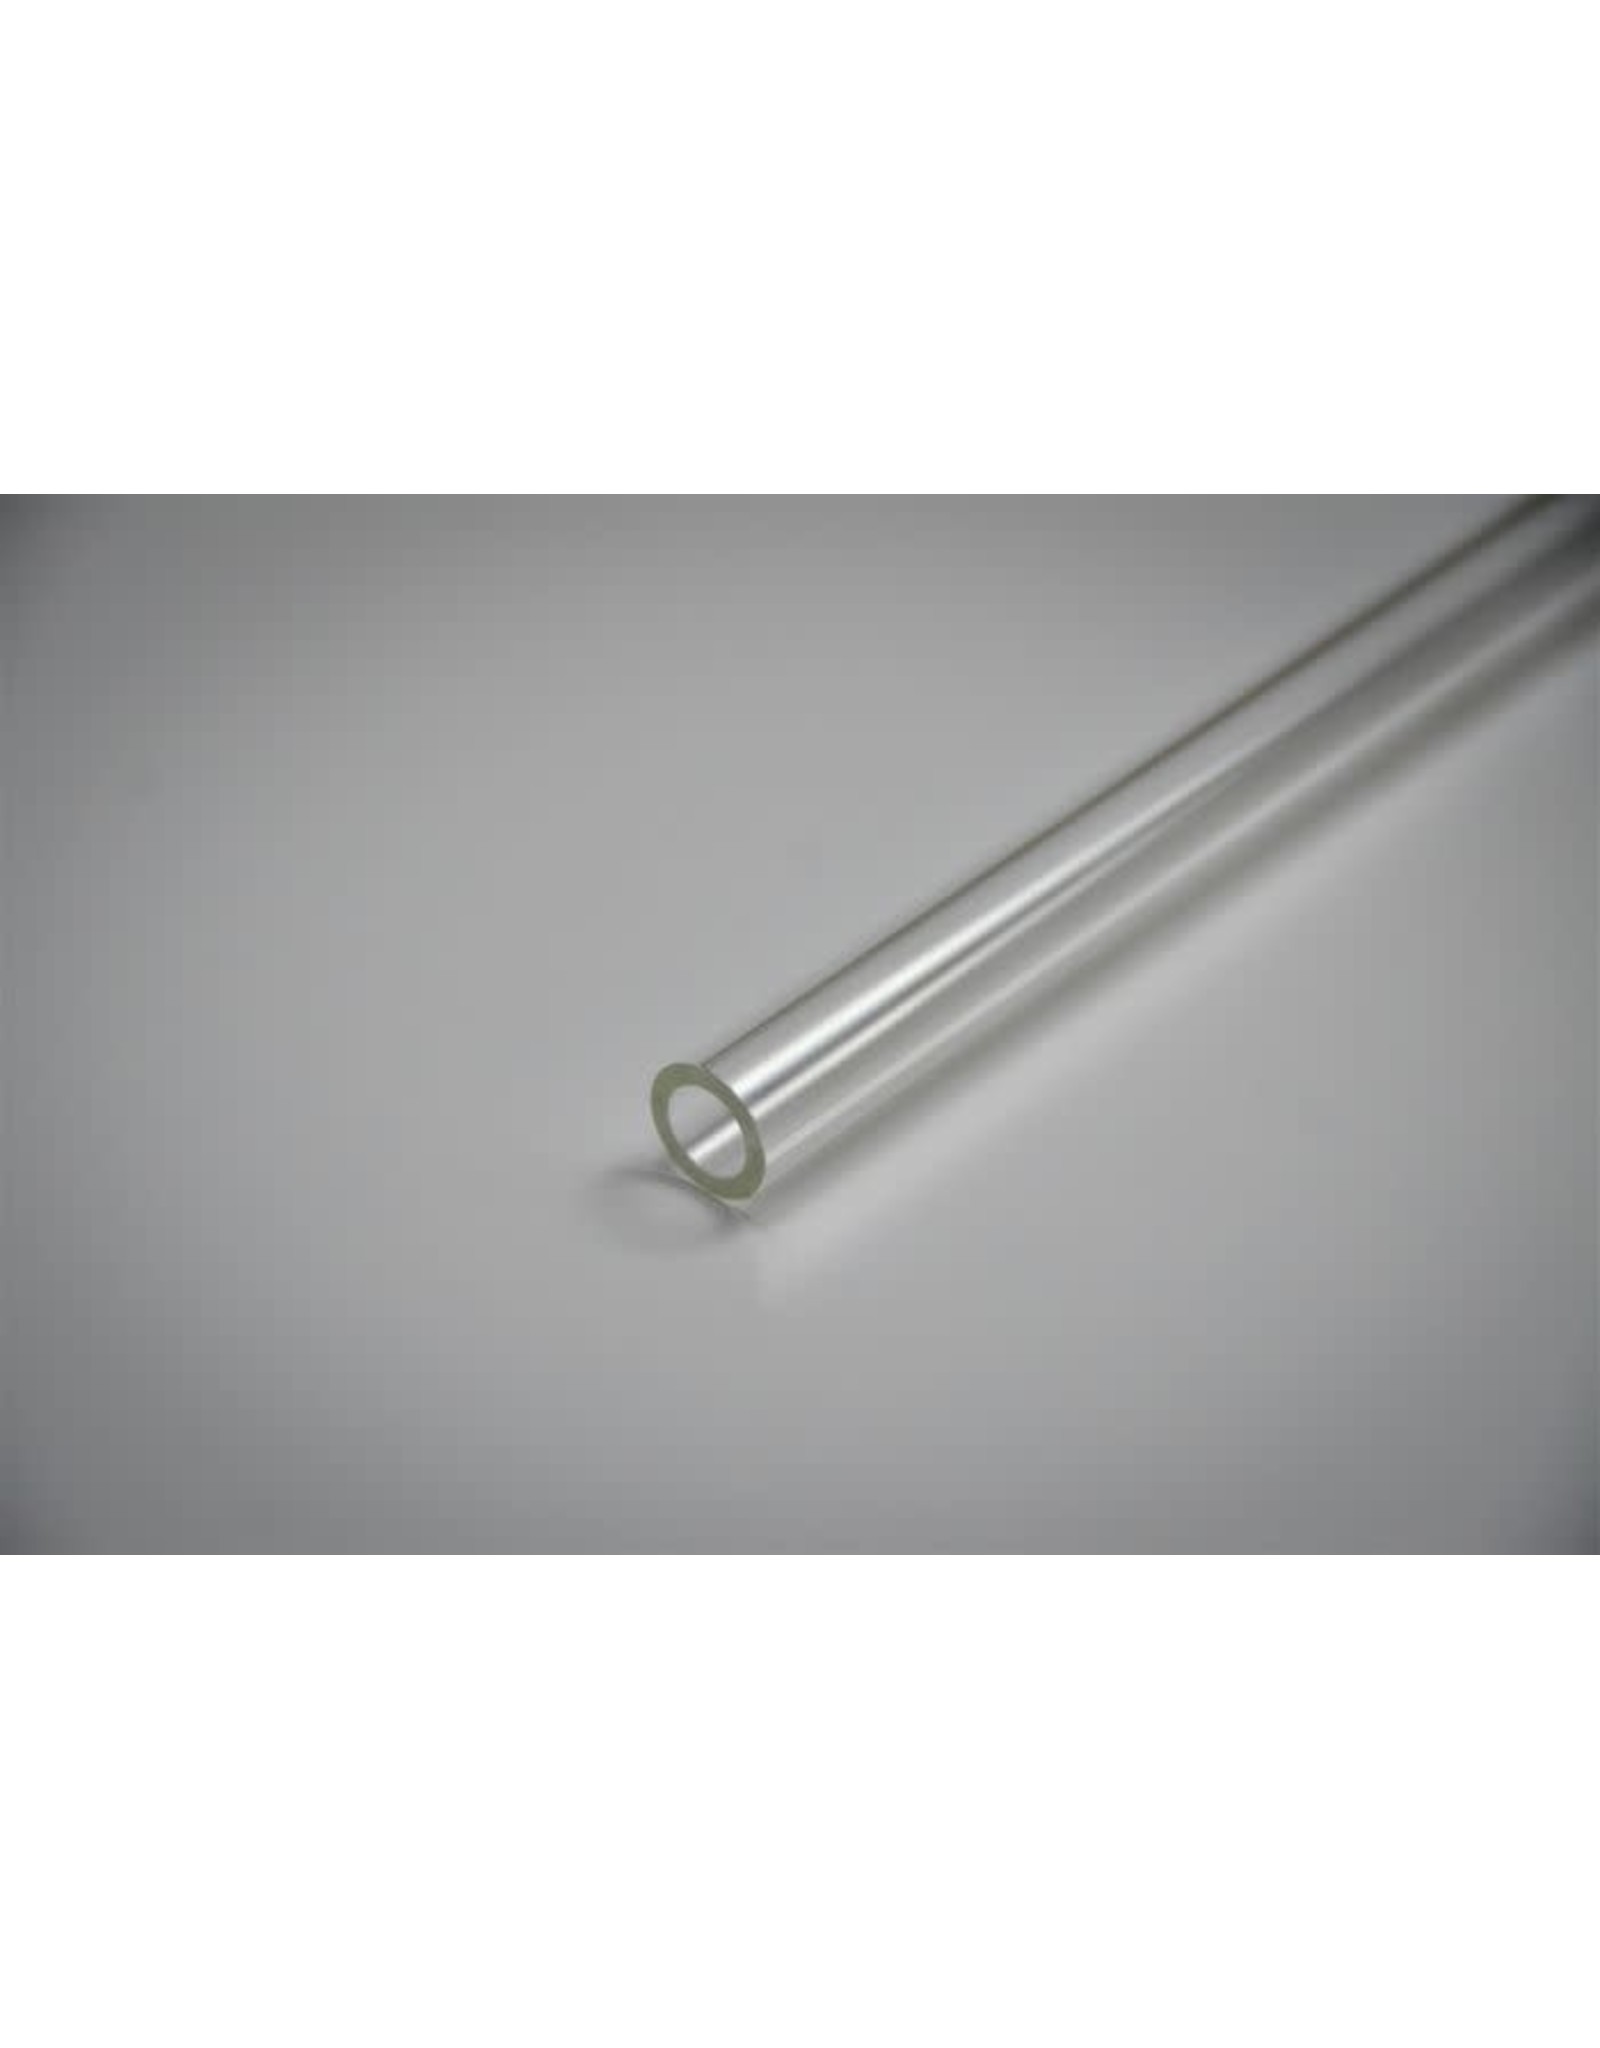 Blichmann Level Gauge Glass Tube G2 10gal Blichmann